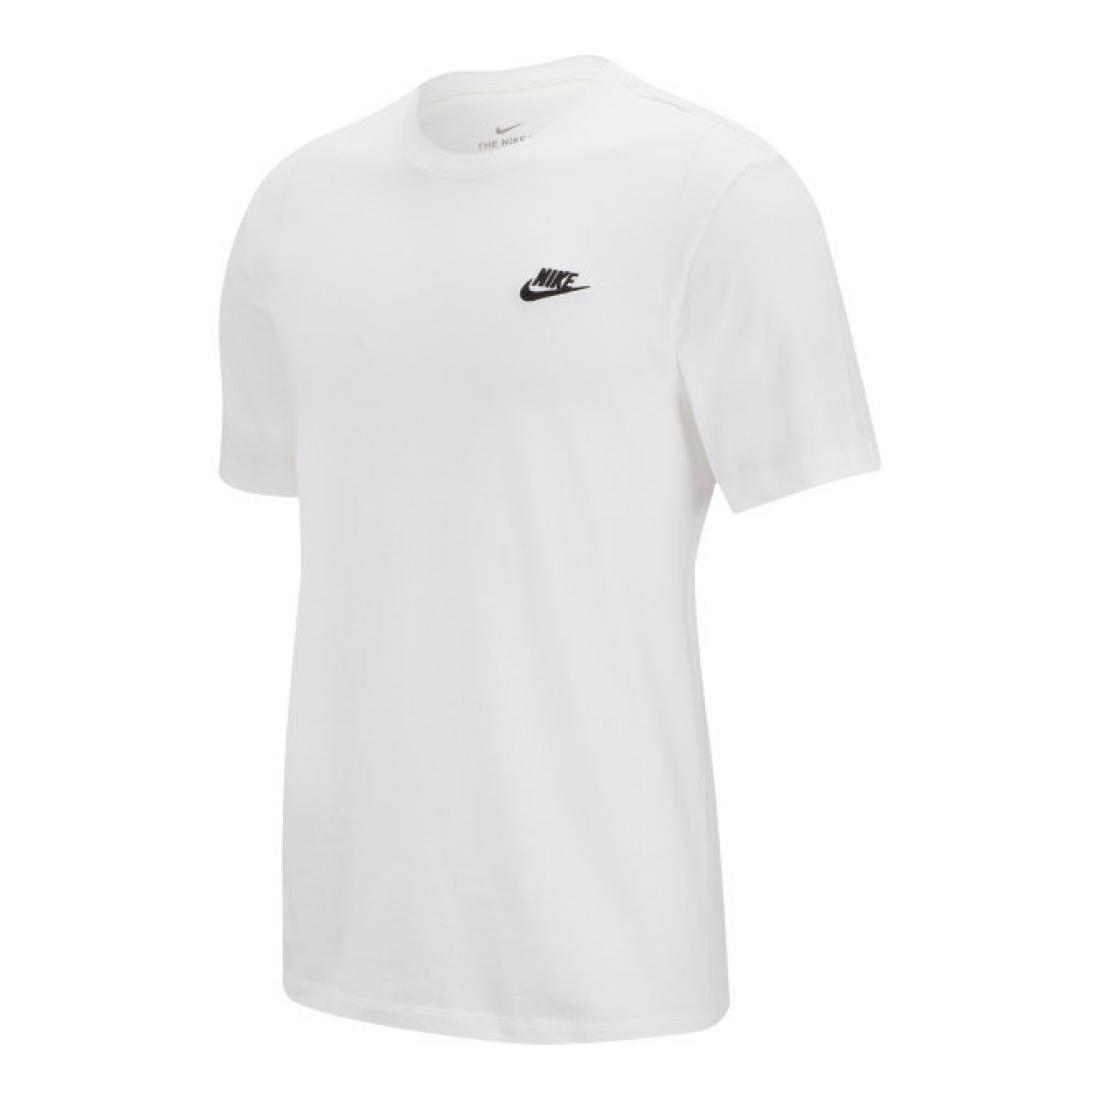 Nike T-Shirt Herren NSW Club Tee